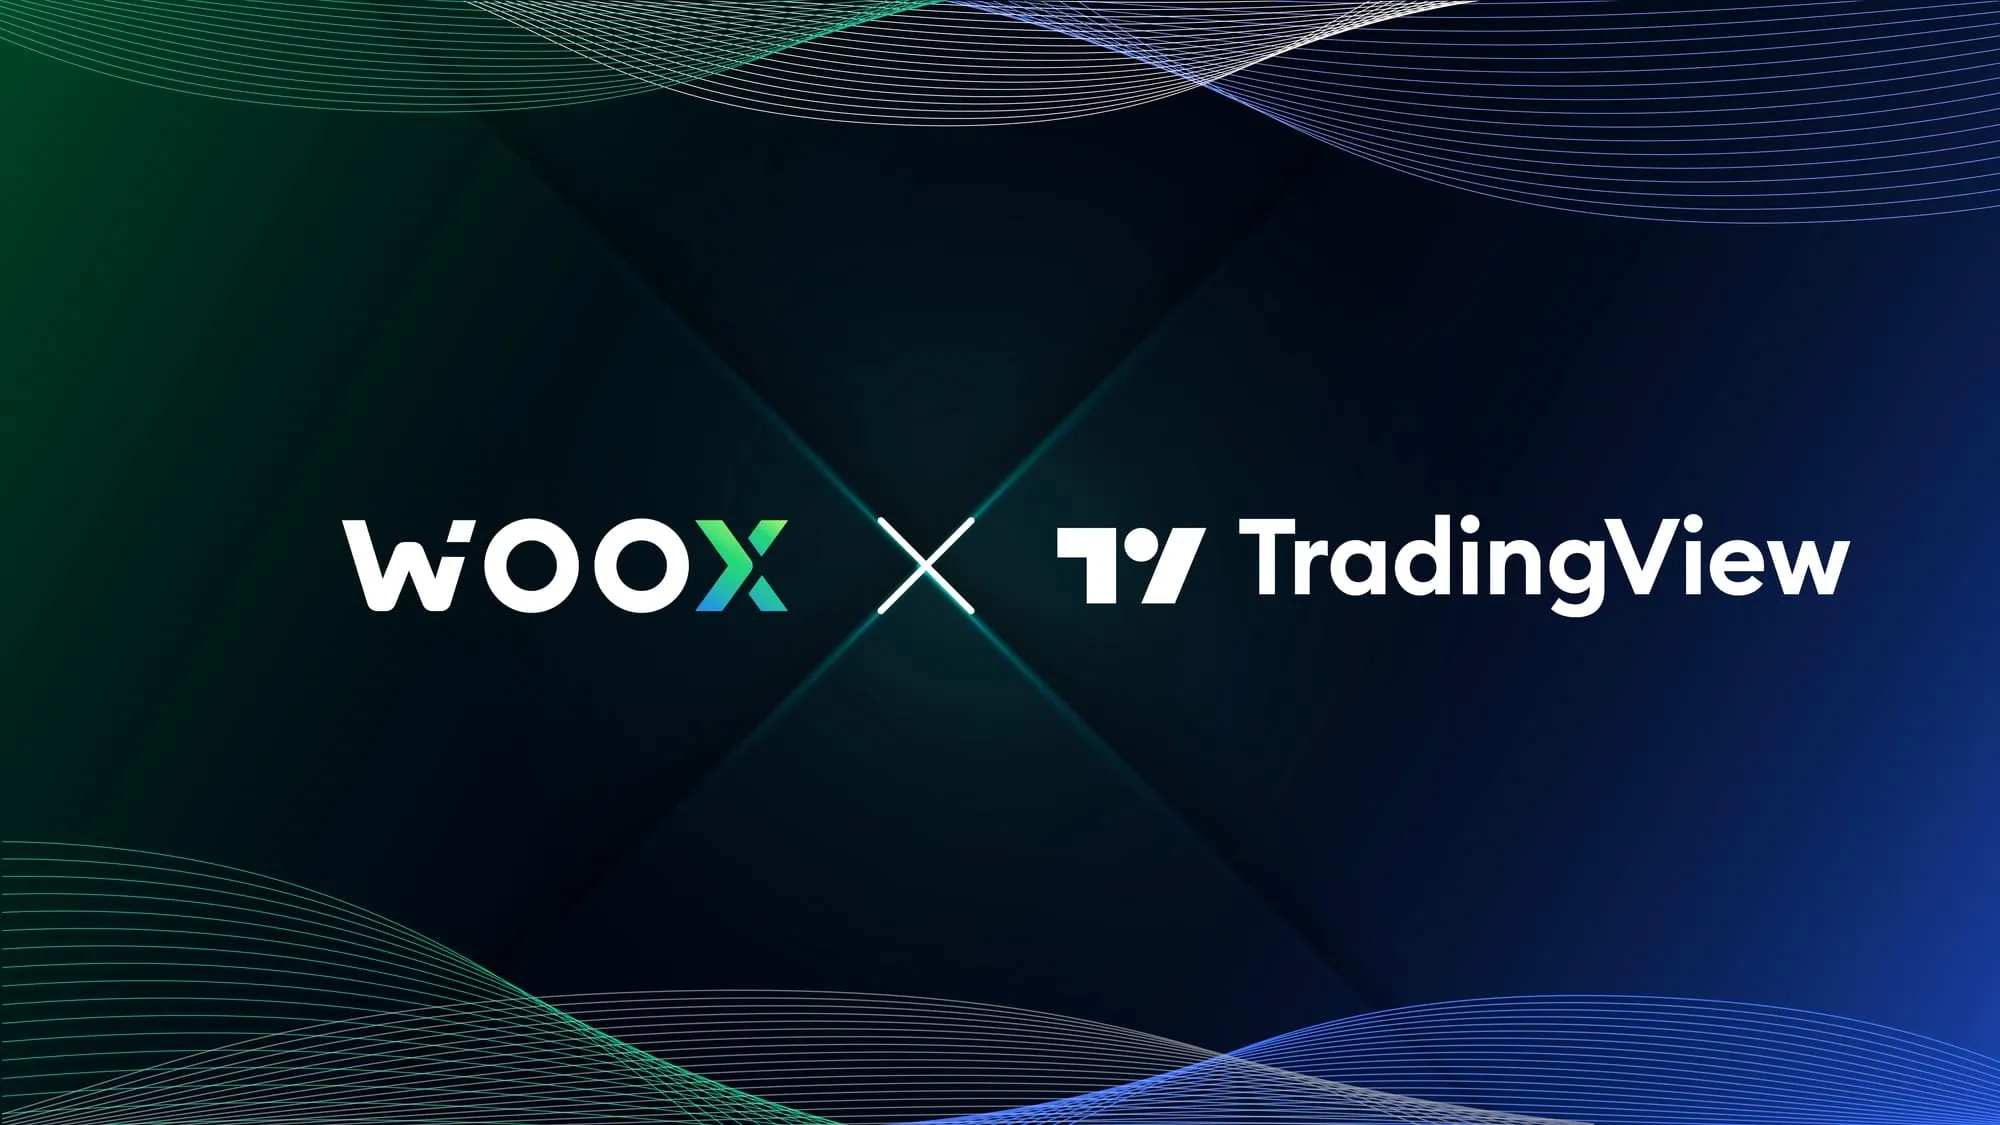 WOO X Global 升級至最新版本 TradingView 以提供最佳交易體驗